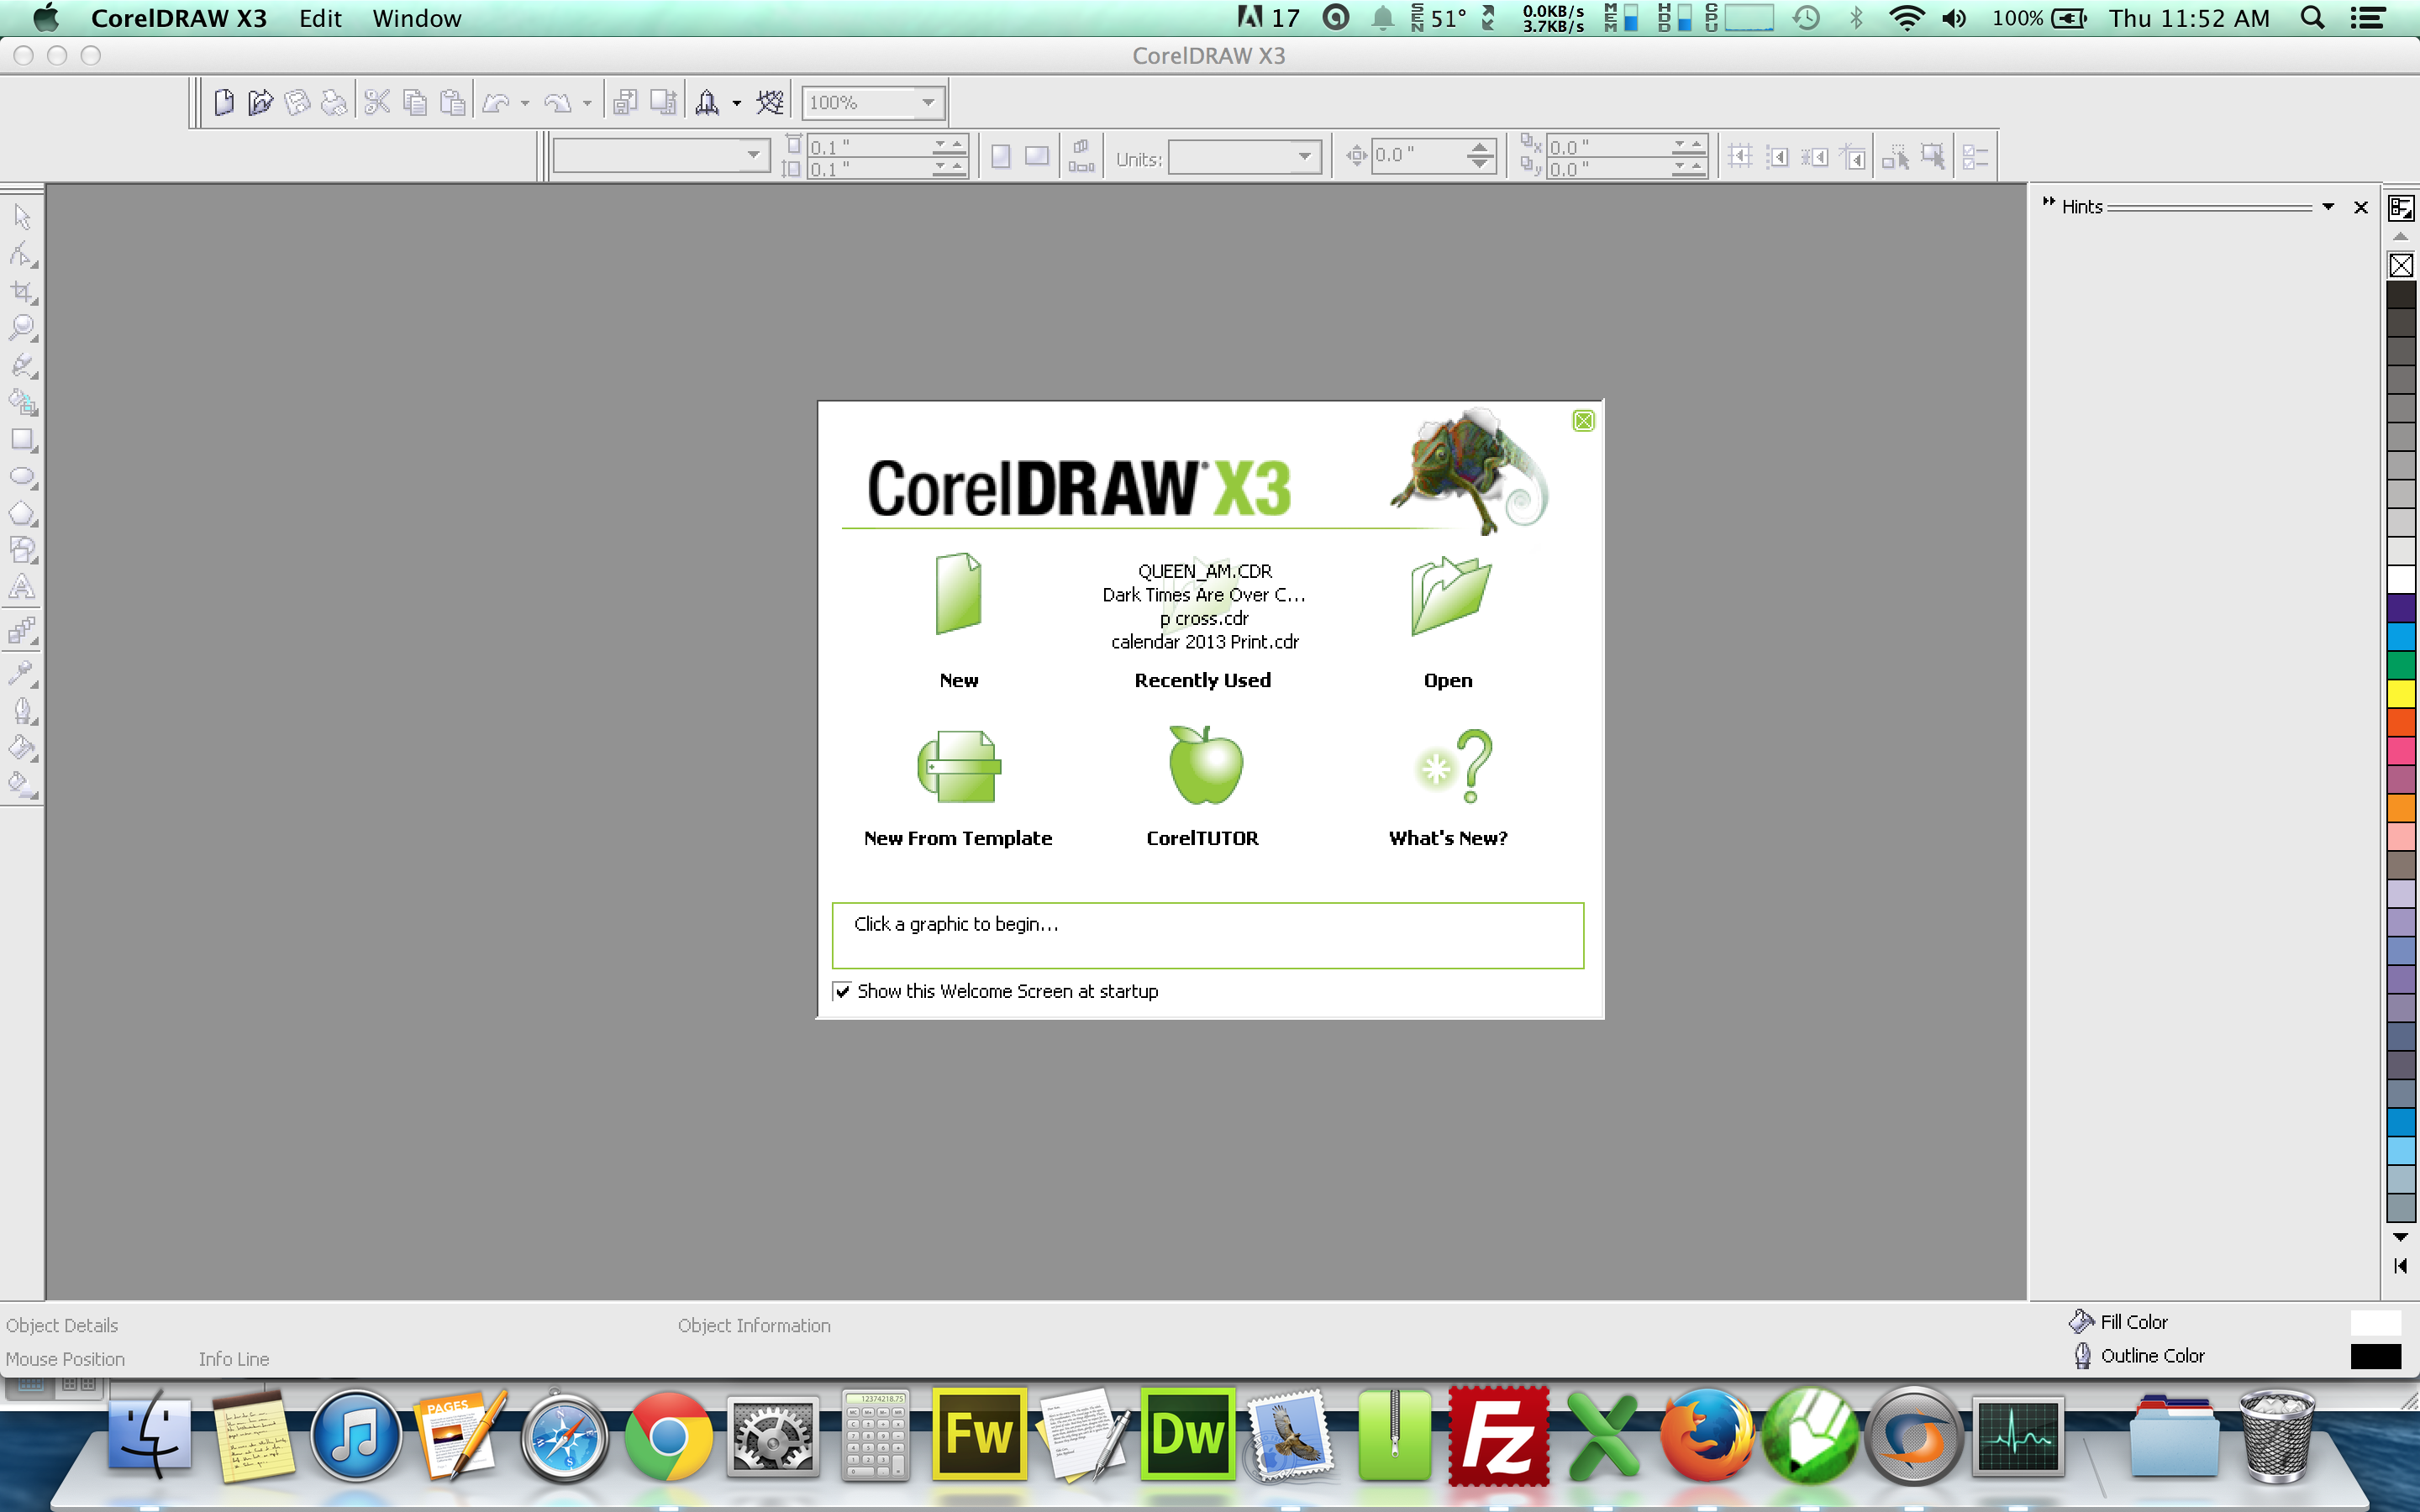 corel draw for mac free download